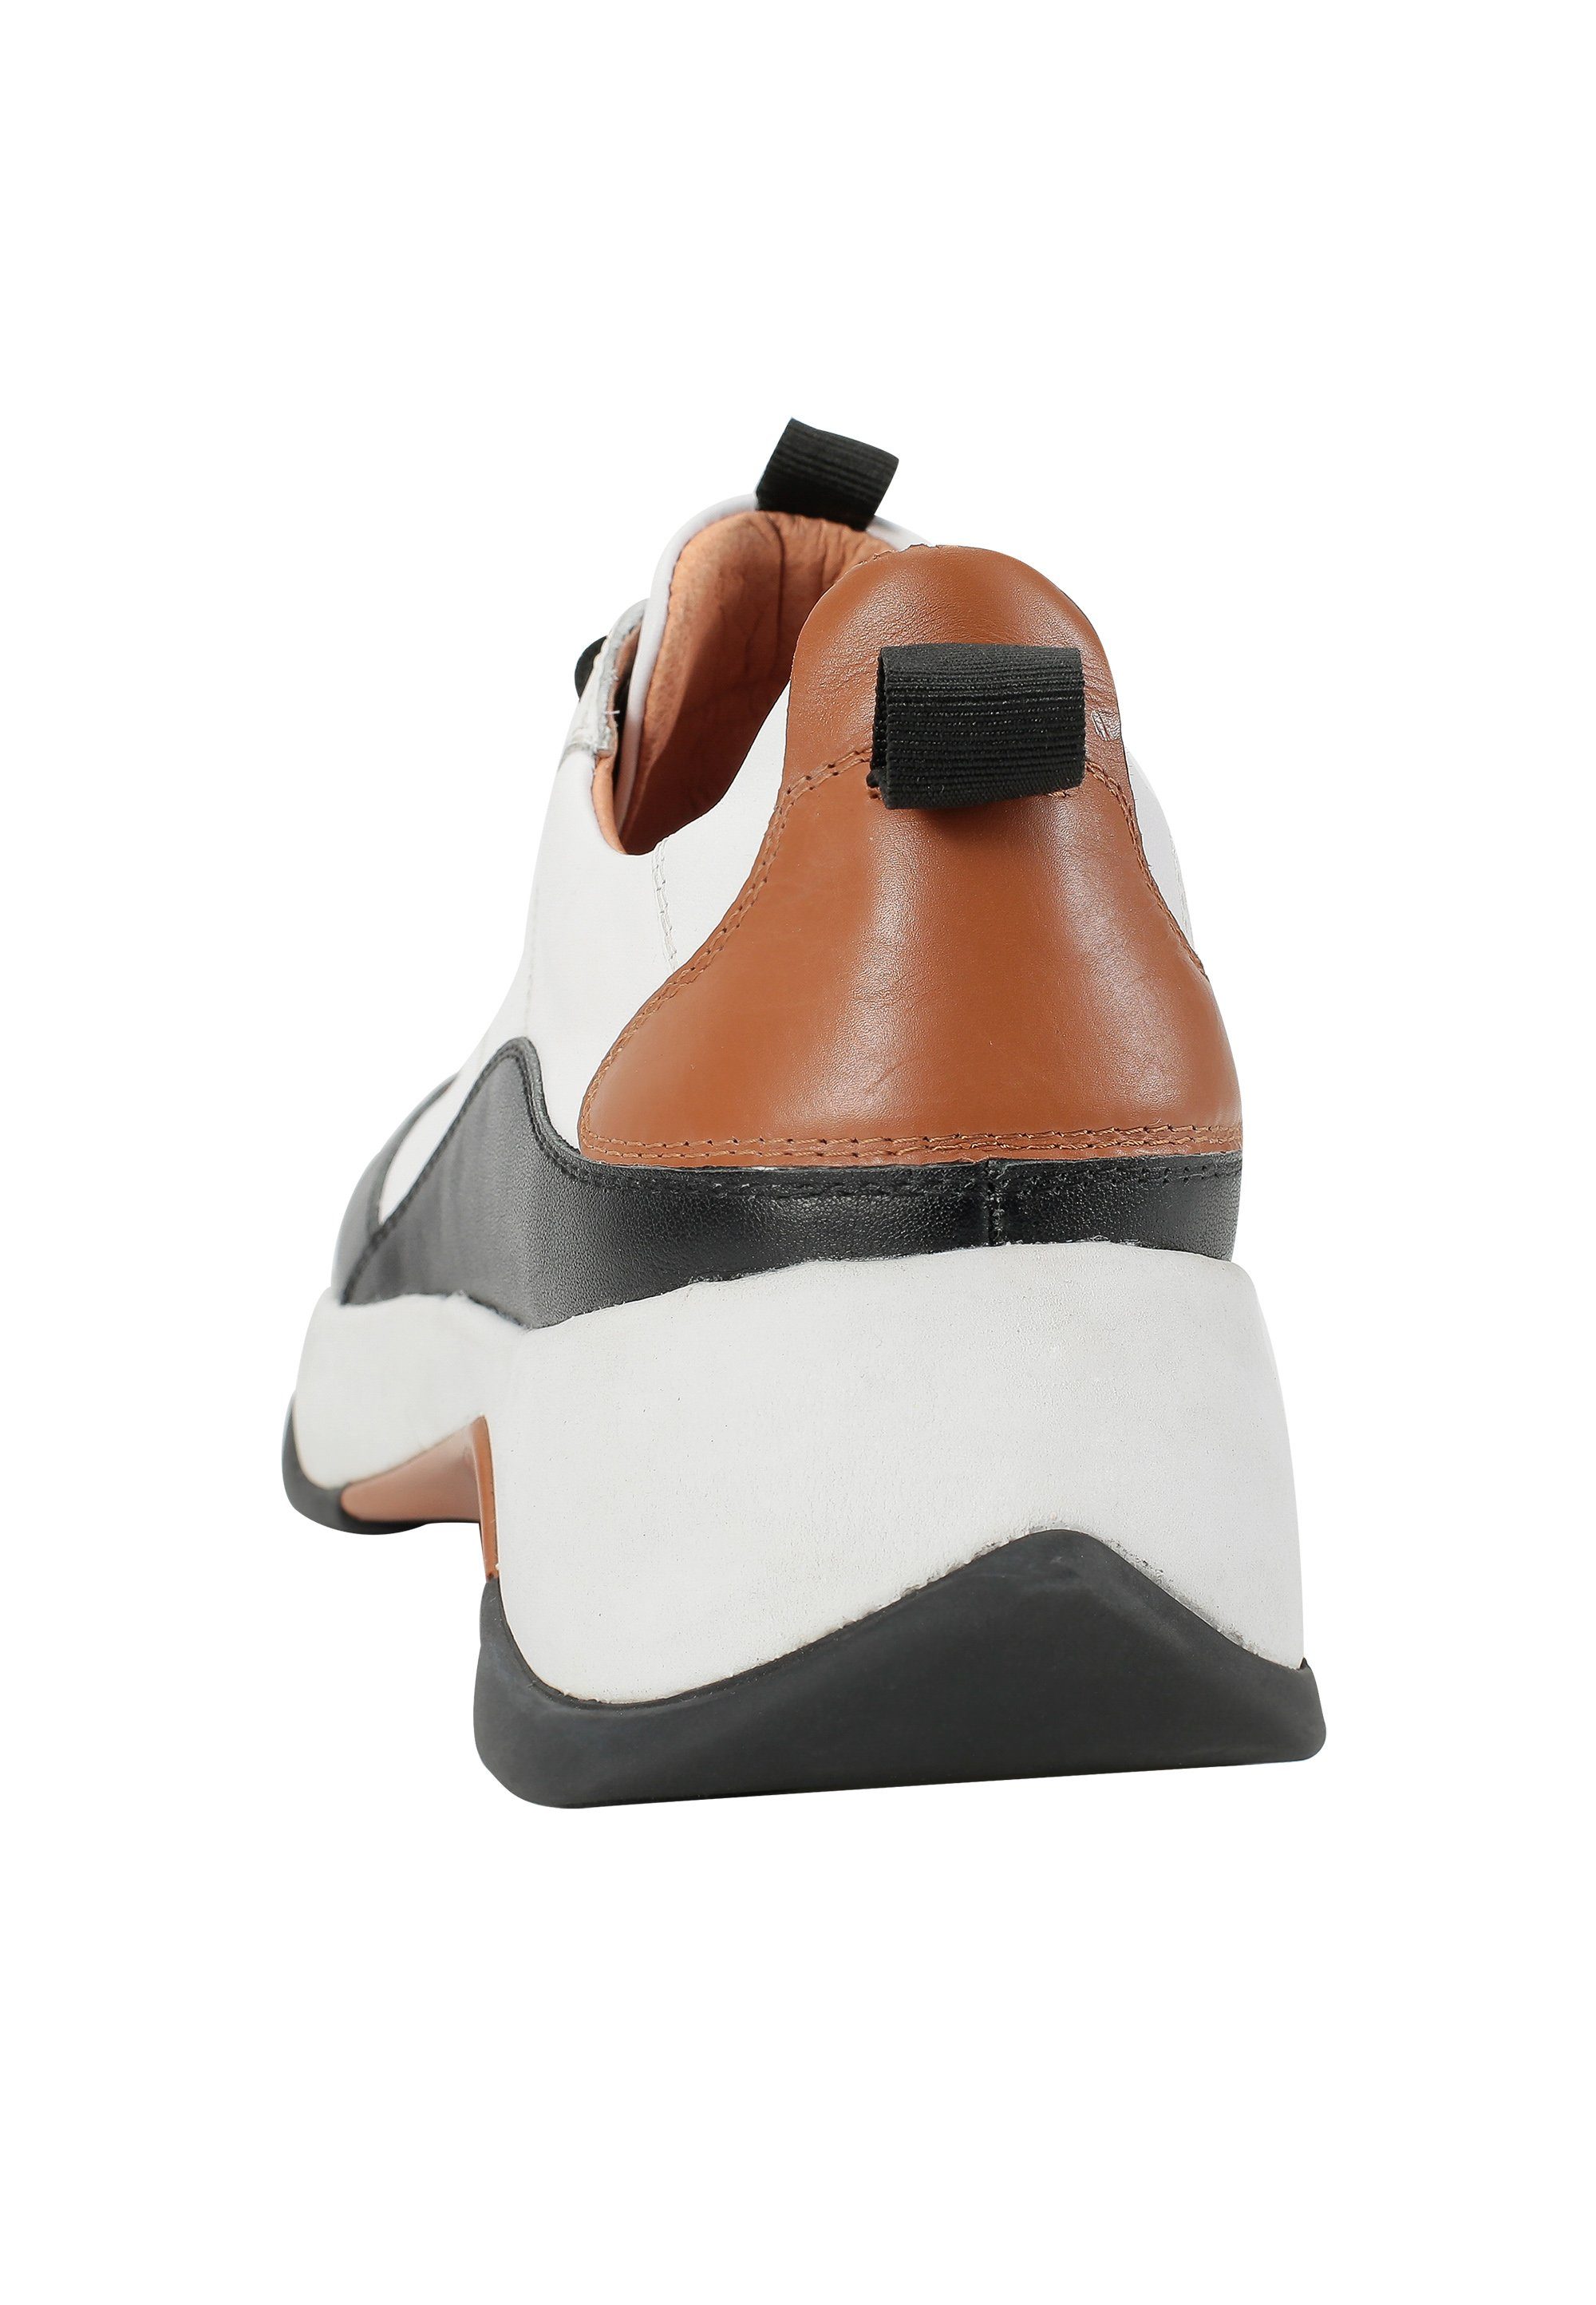 Schuhe Sneaker ekonika Sneaker hergestellt aus echtem Leder